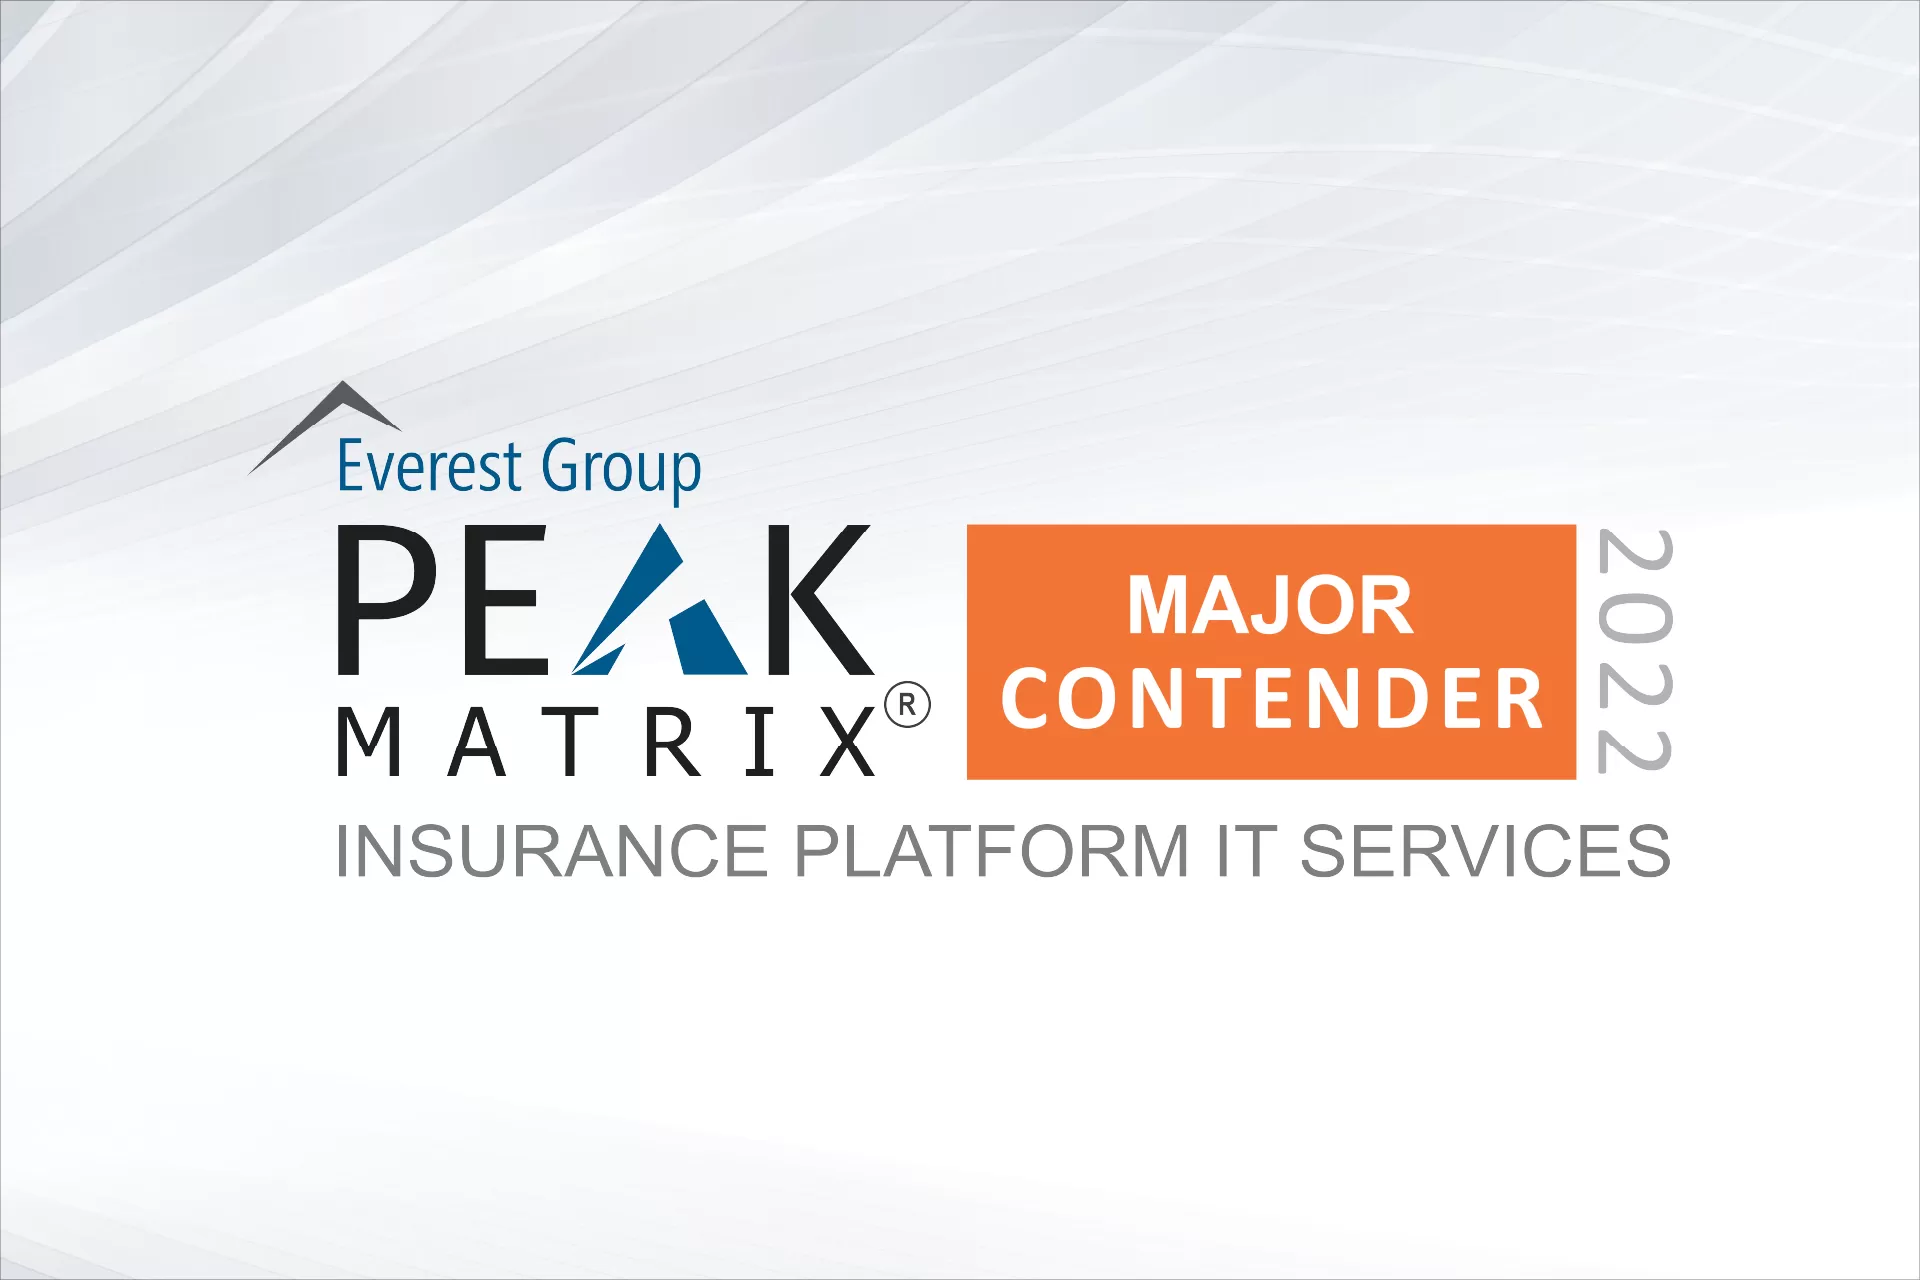 Zensar has been mentioned as “Major Contender” in Everest Group PEAK Matrix® for Insurance Platform IT Service Providers 2022